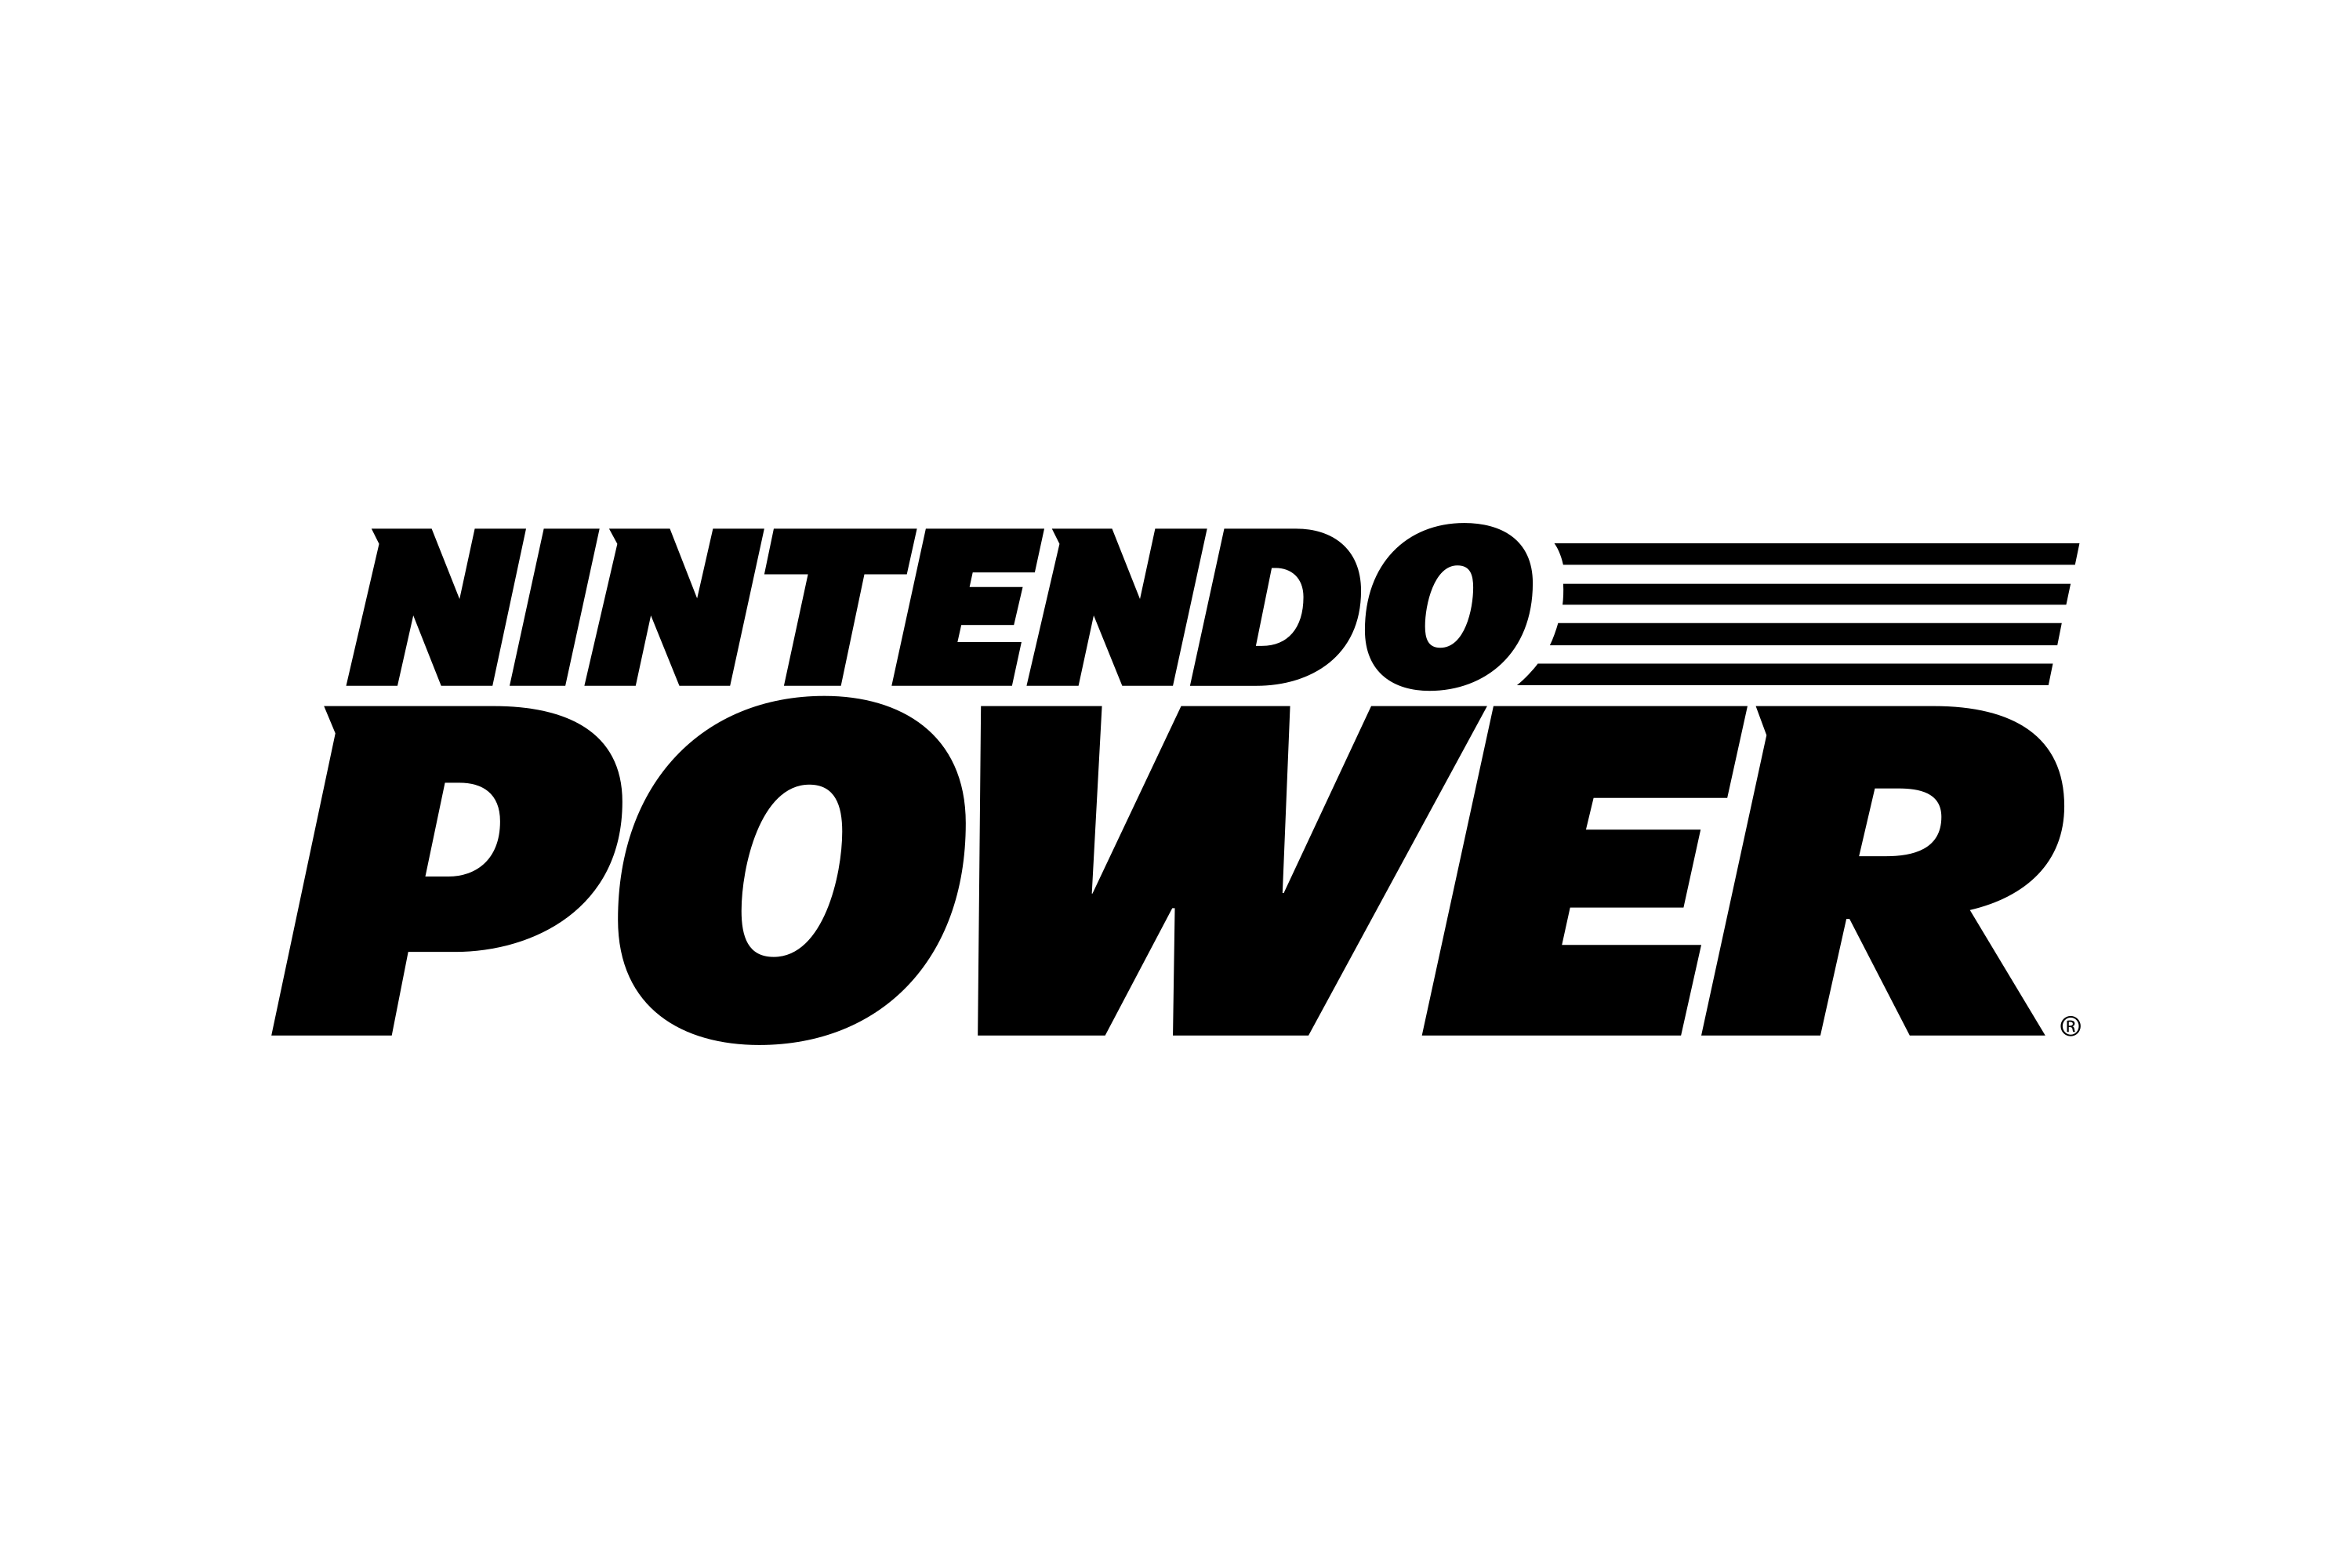 Power logo. Nintendo Power logo. Power картинки. Нинтендо вектор. Nintendo power